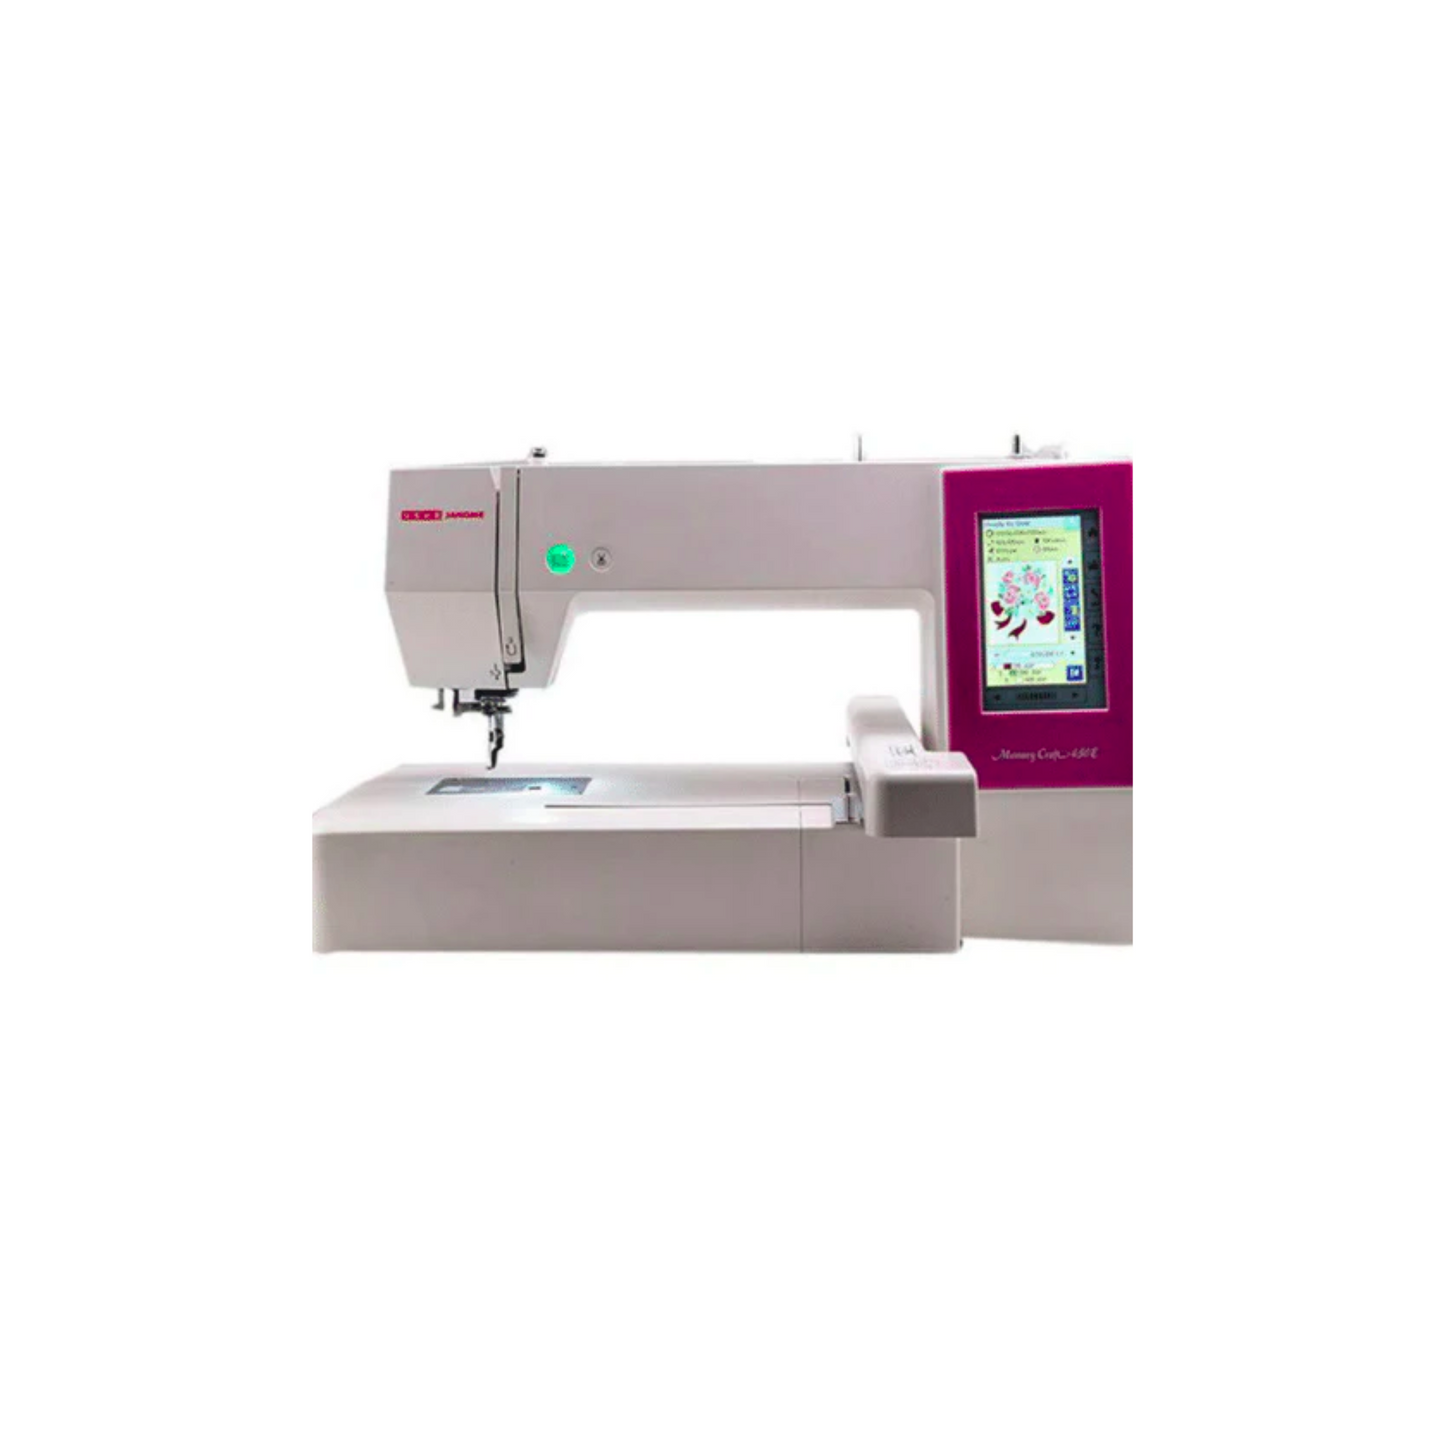 Janome MC450E embroidery machine - Sewing machine - White - Front view